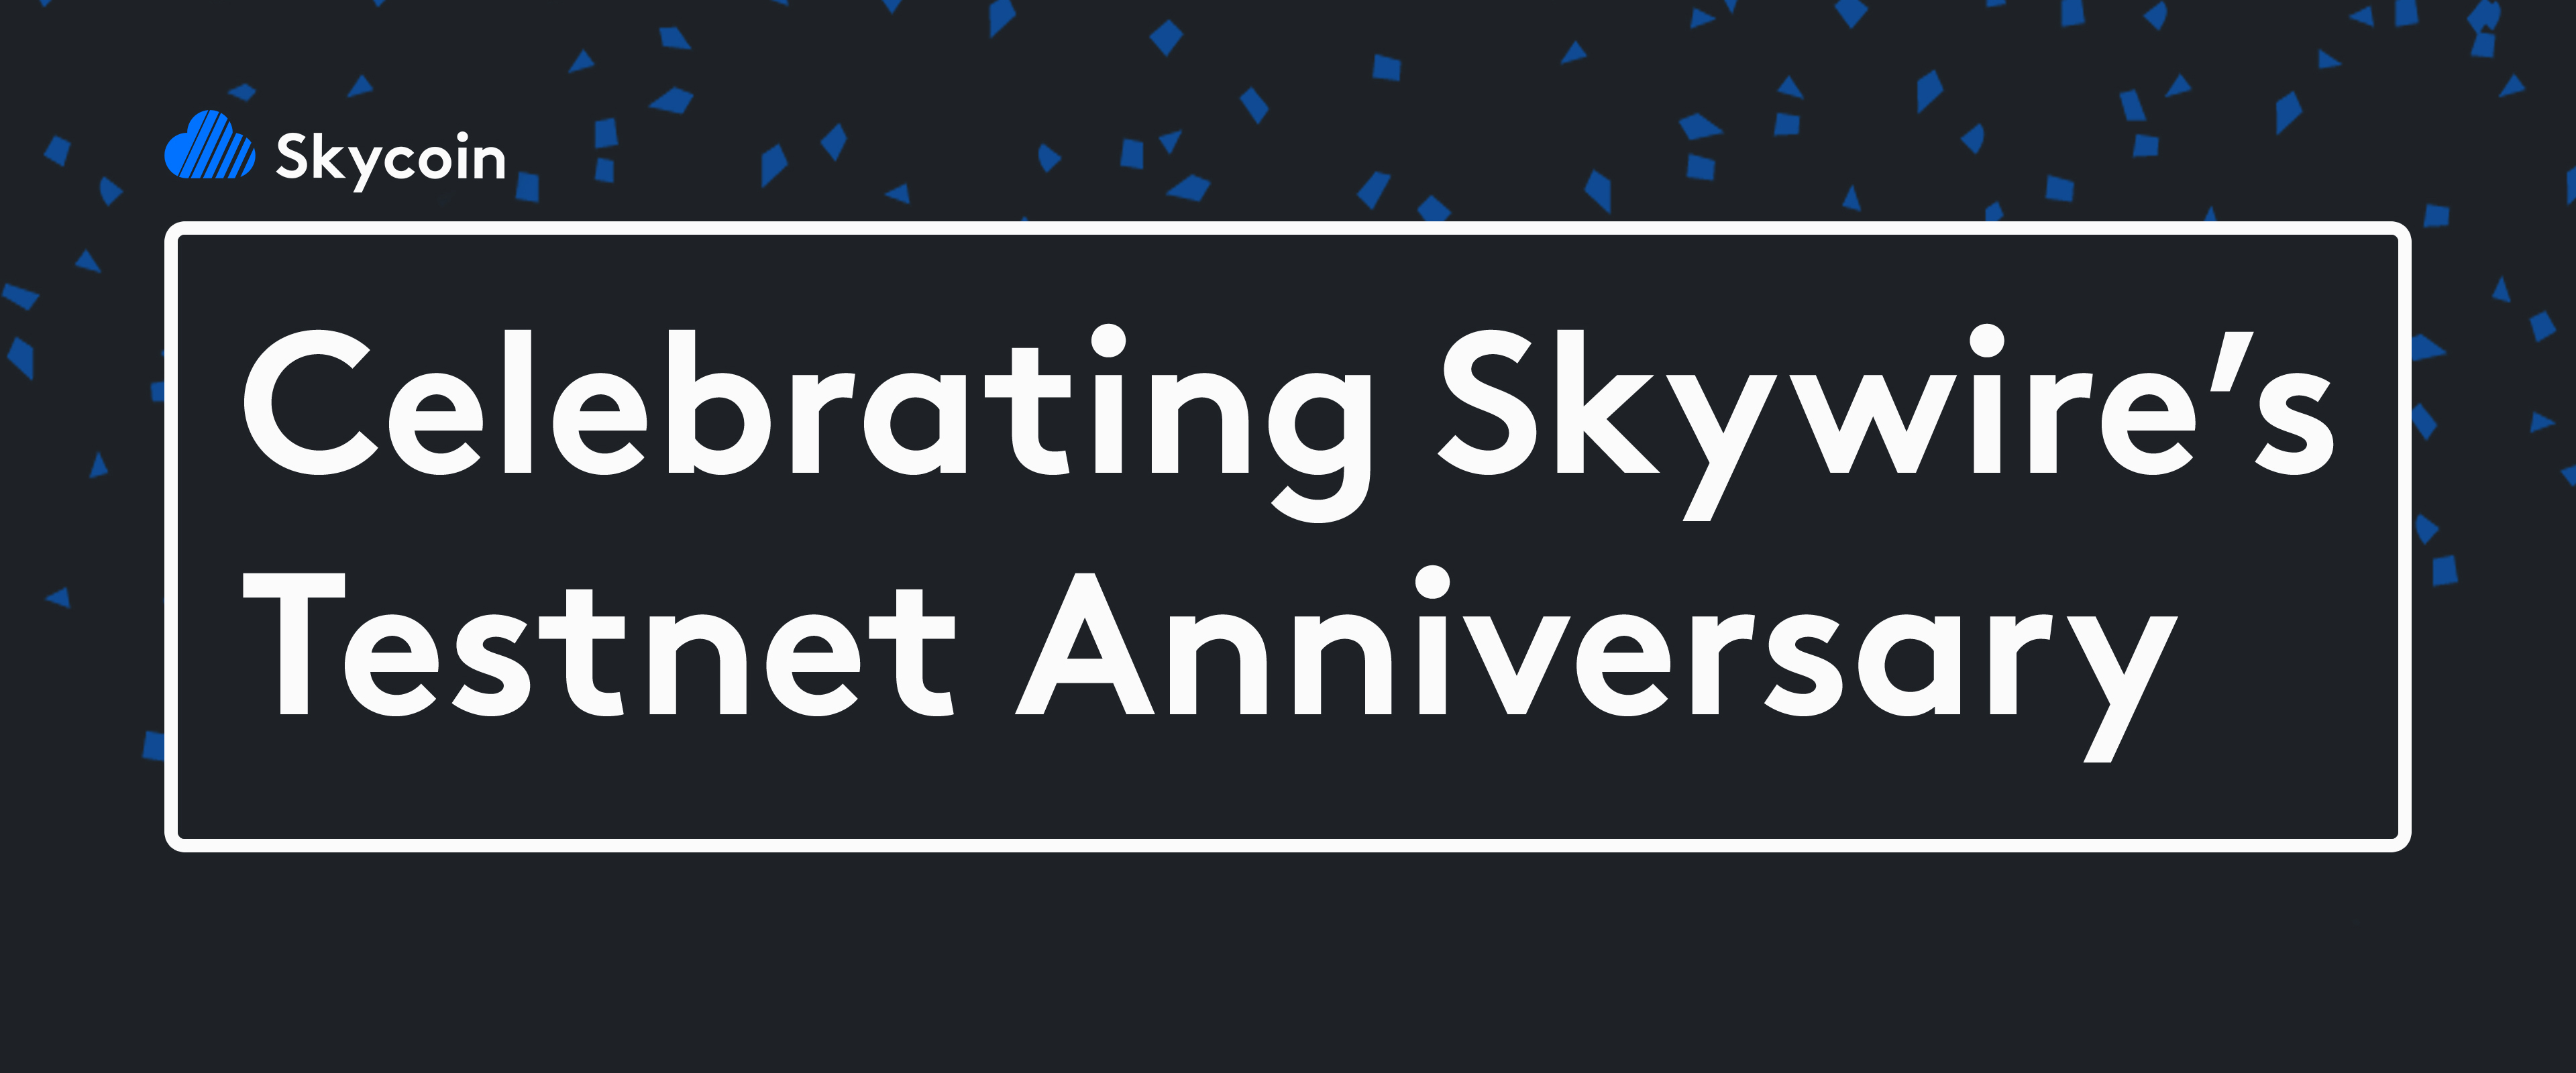 Celebrating Skywire's Testnet Anniversary